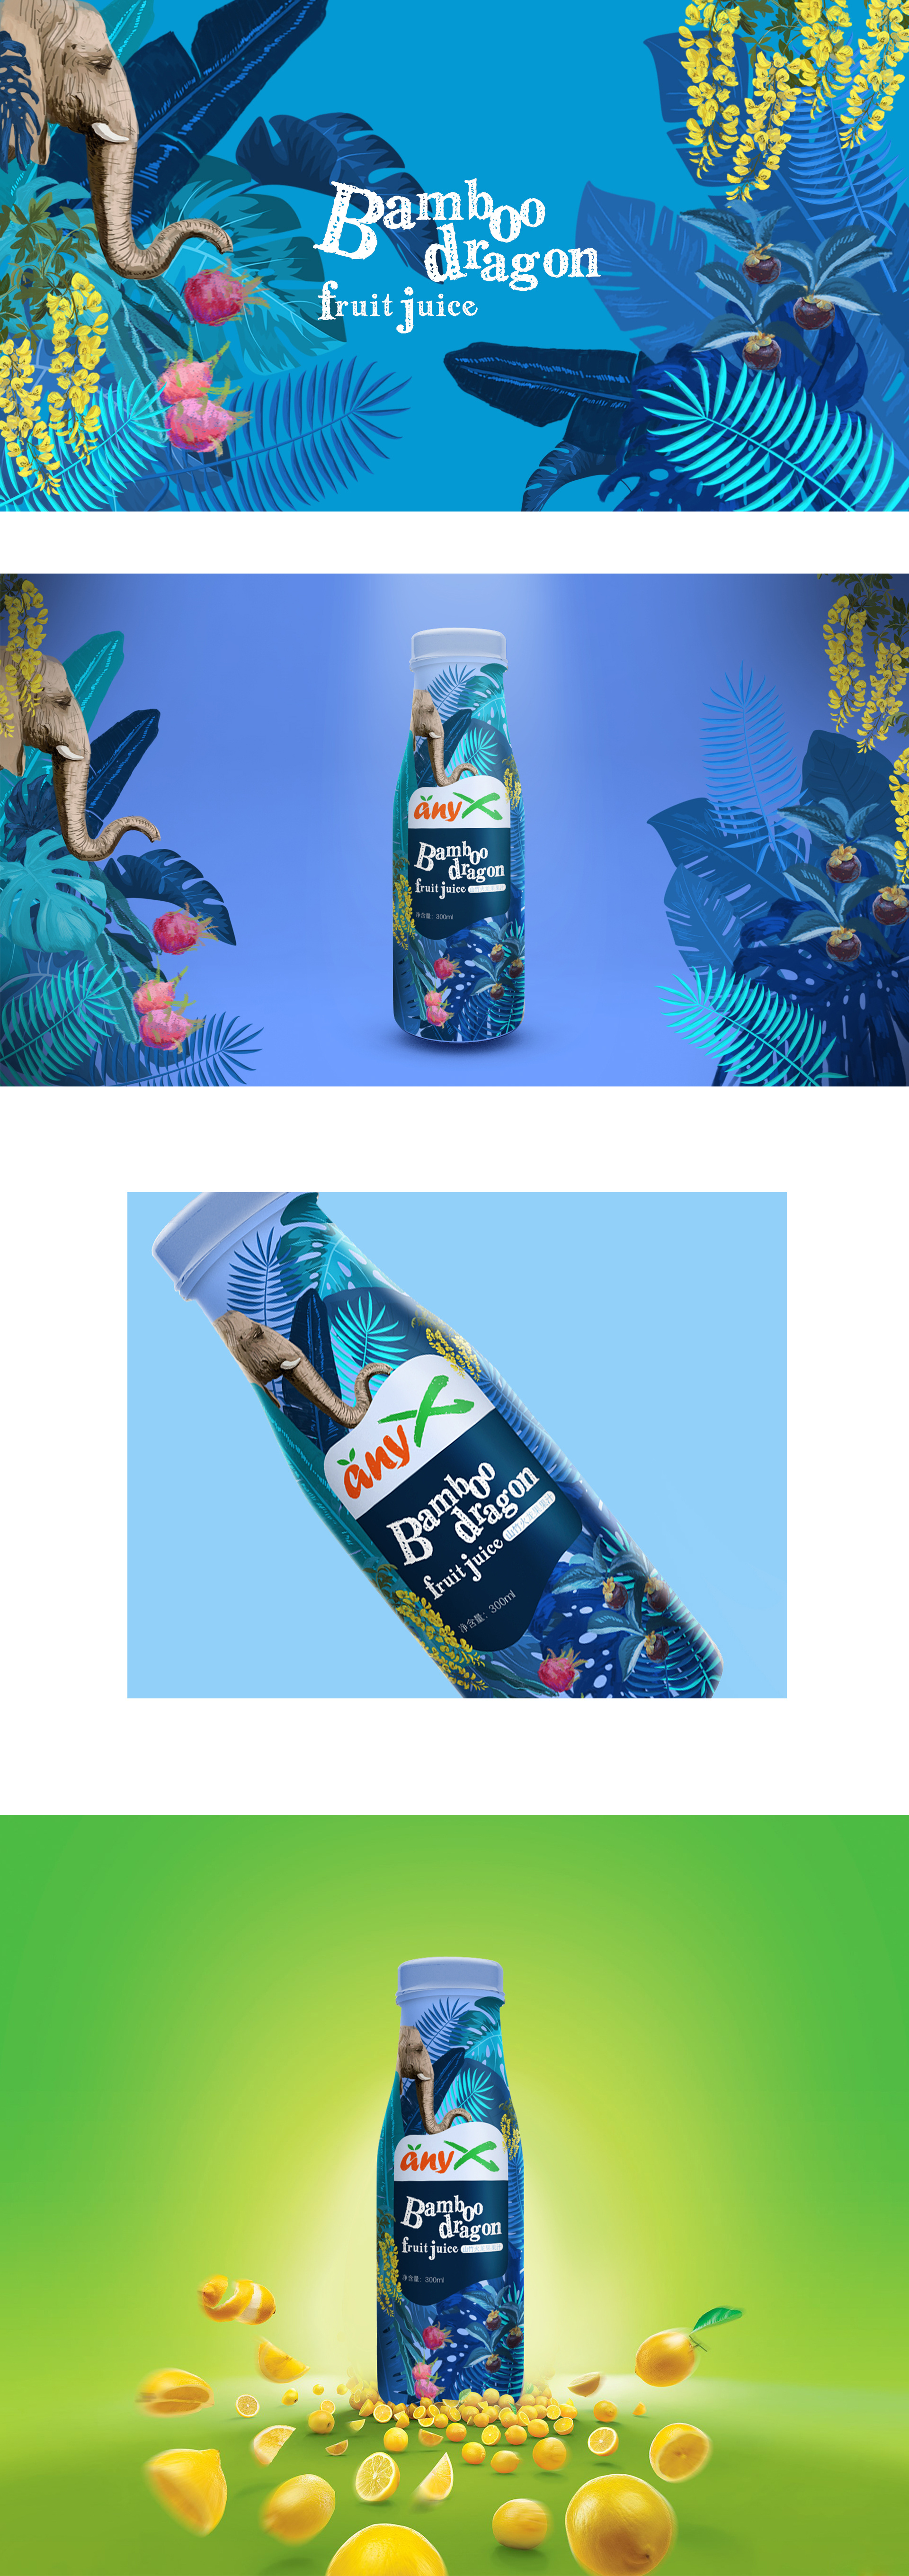 anyx山竹汁果汁|饮料瓶身包装设计